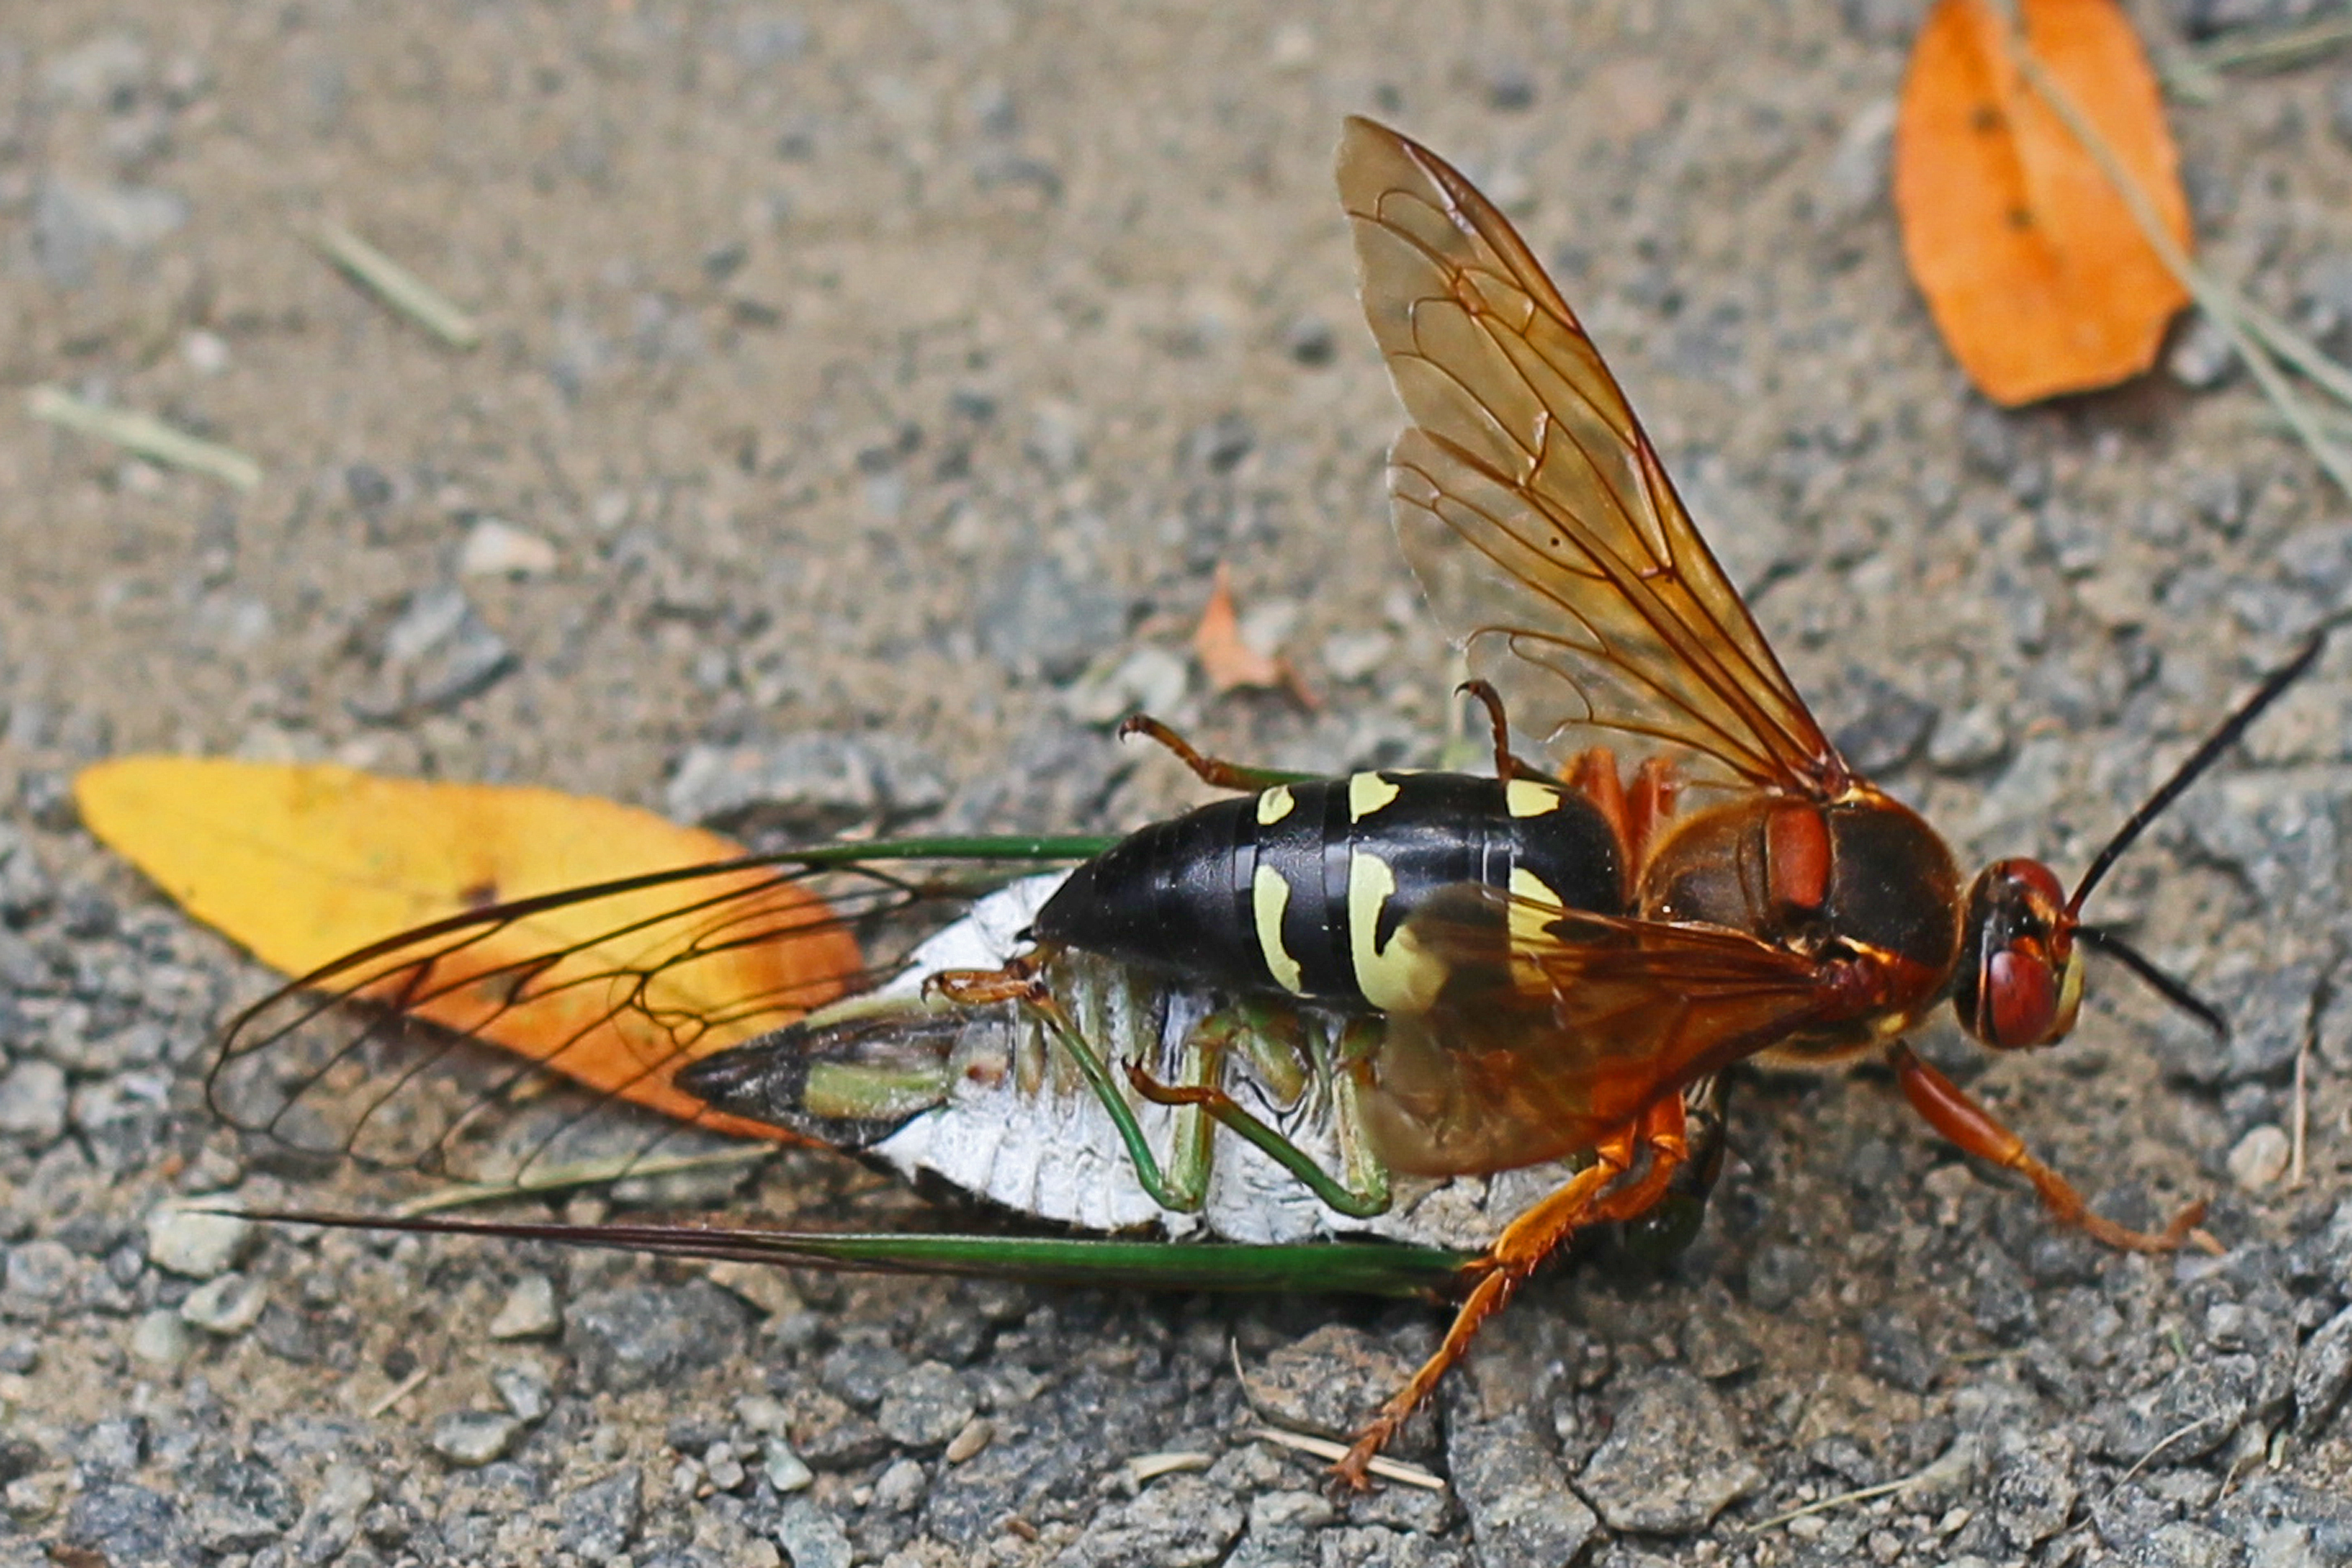 The Eastern Cicada Killer Wasp